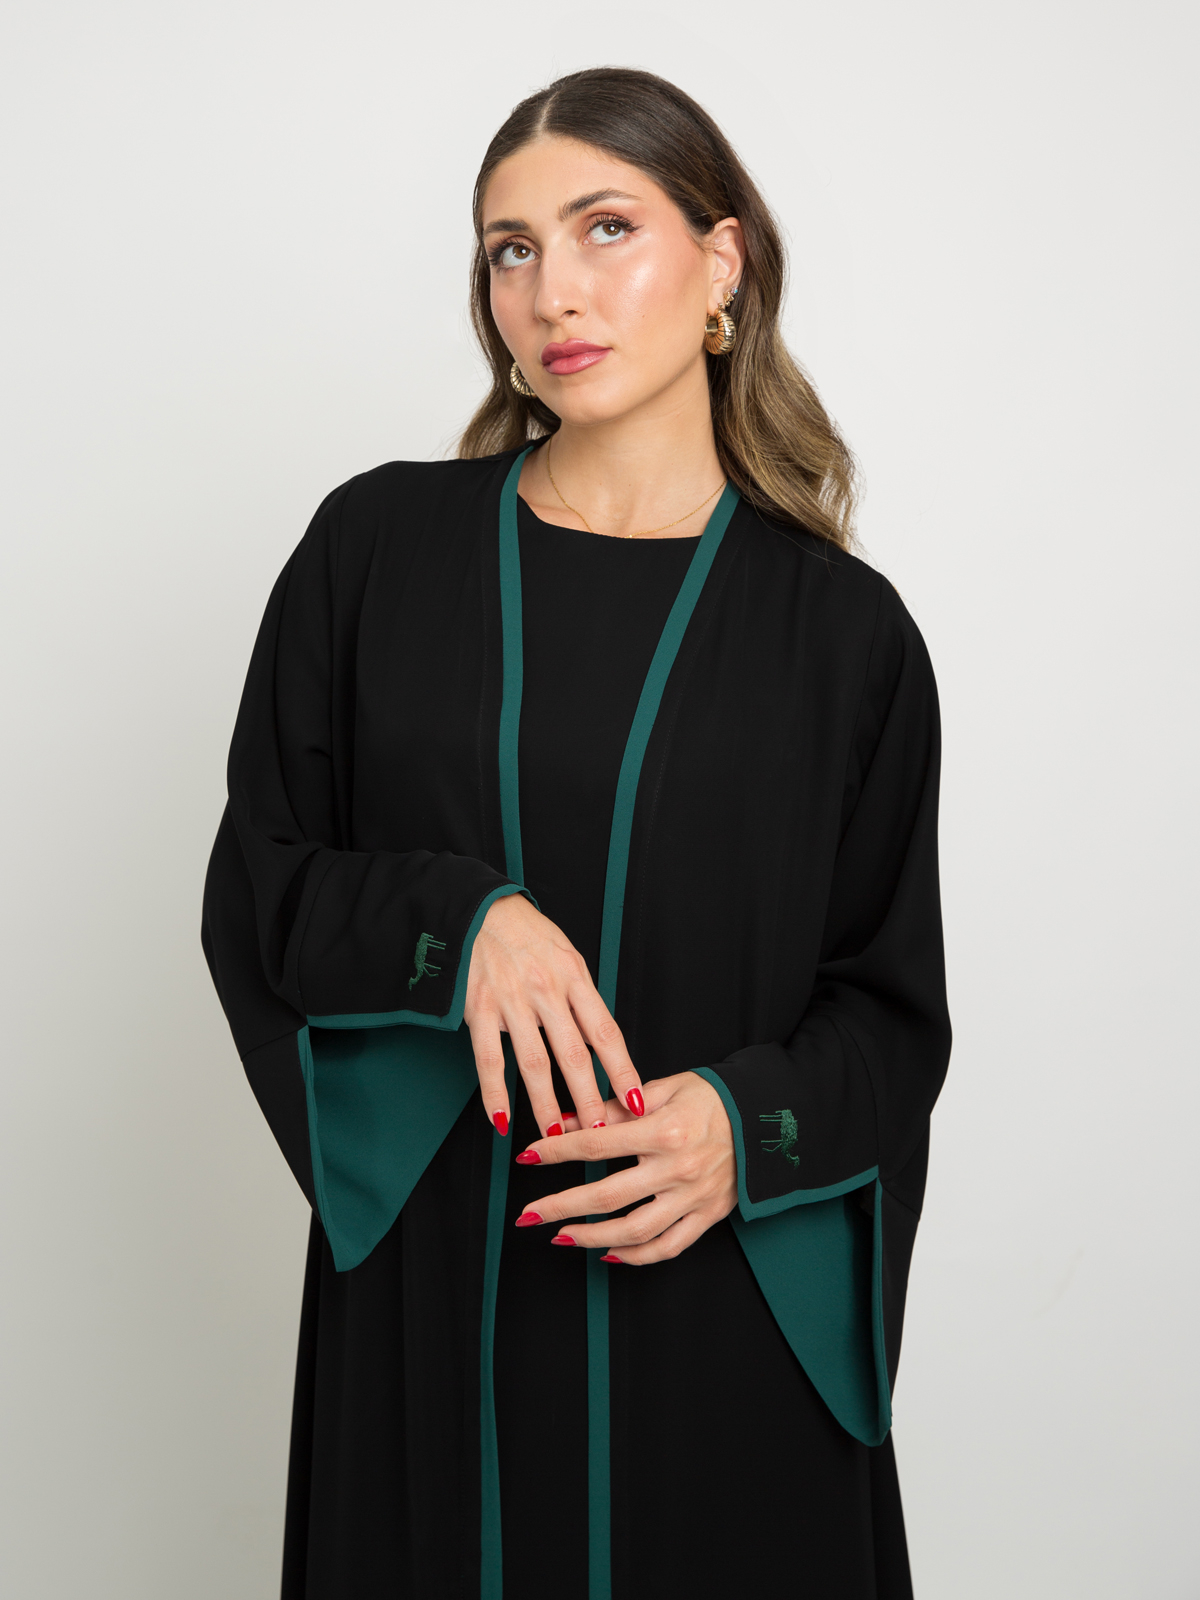 The Camel Black & Green Abaya Matching Set